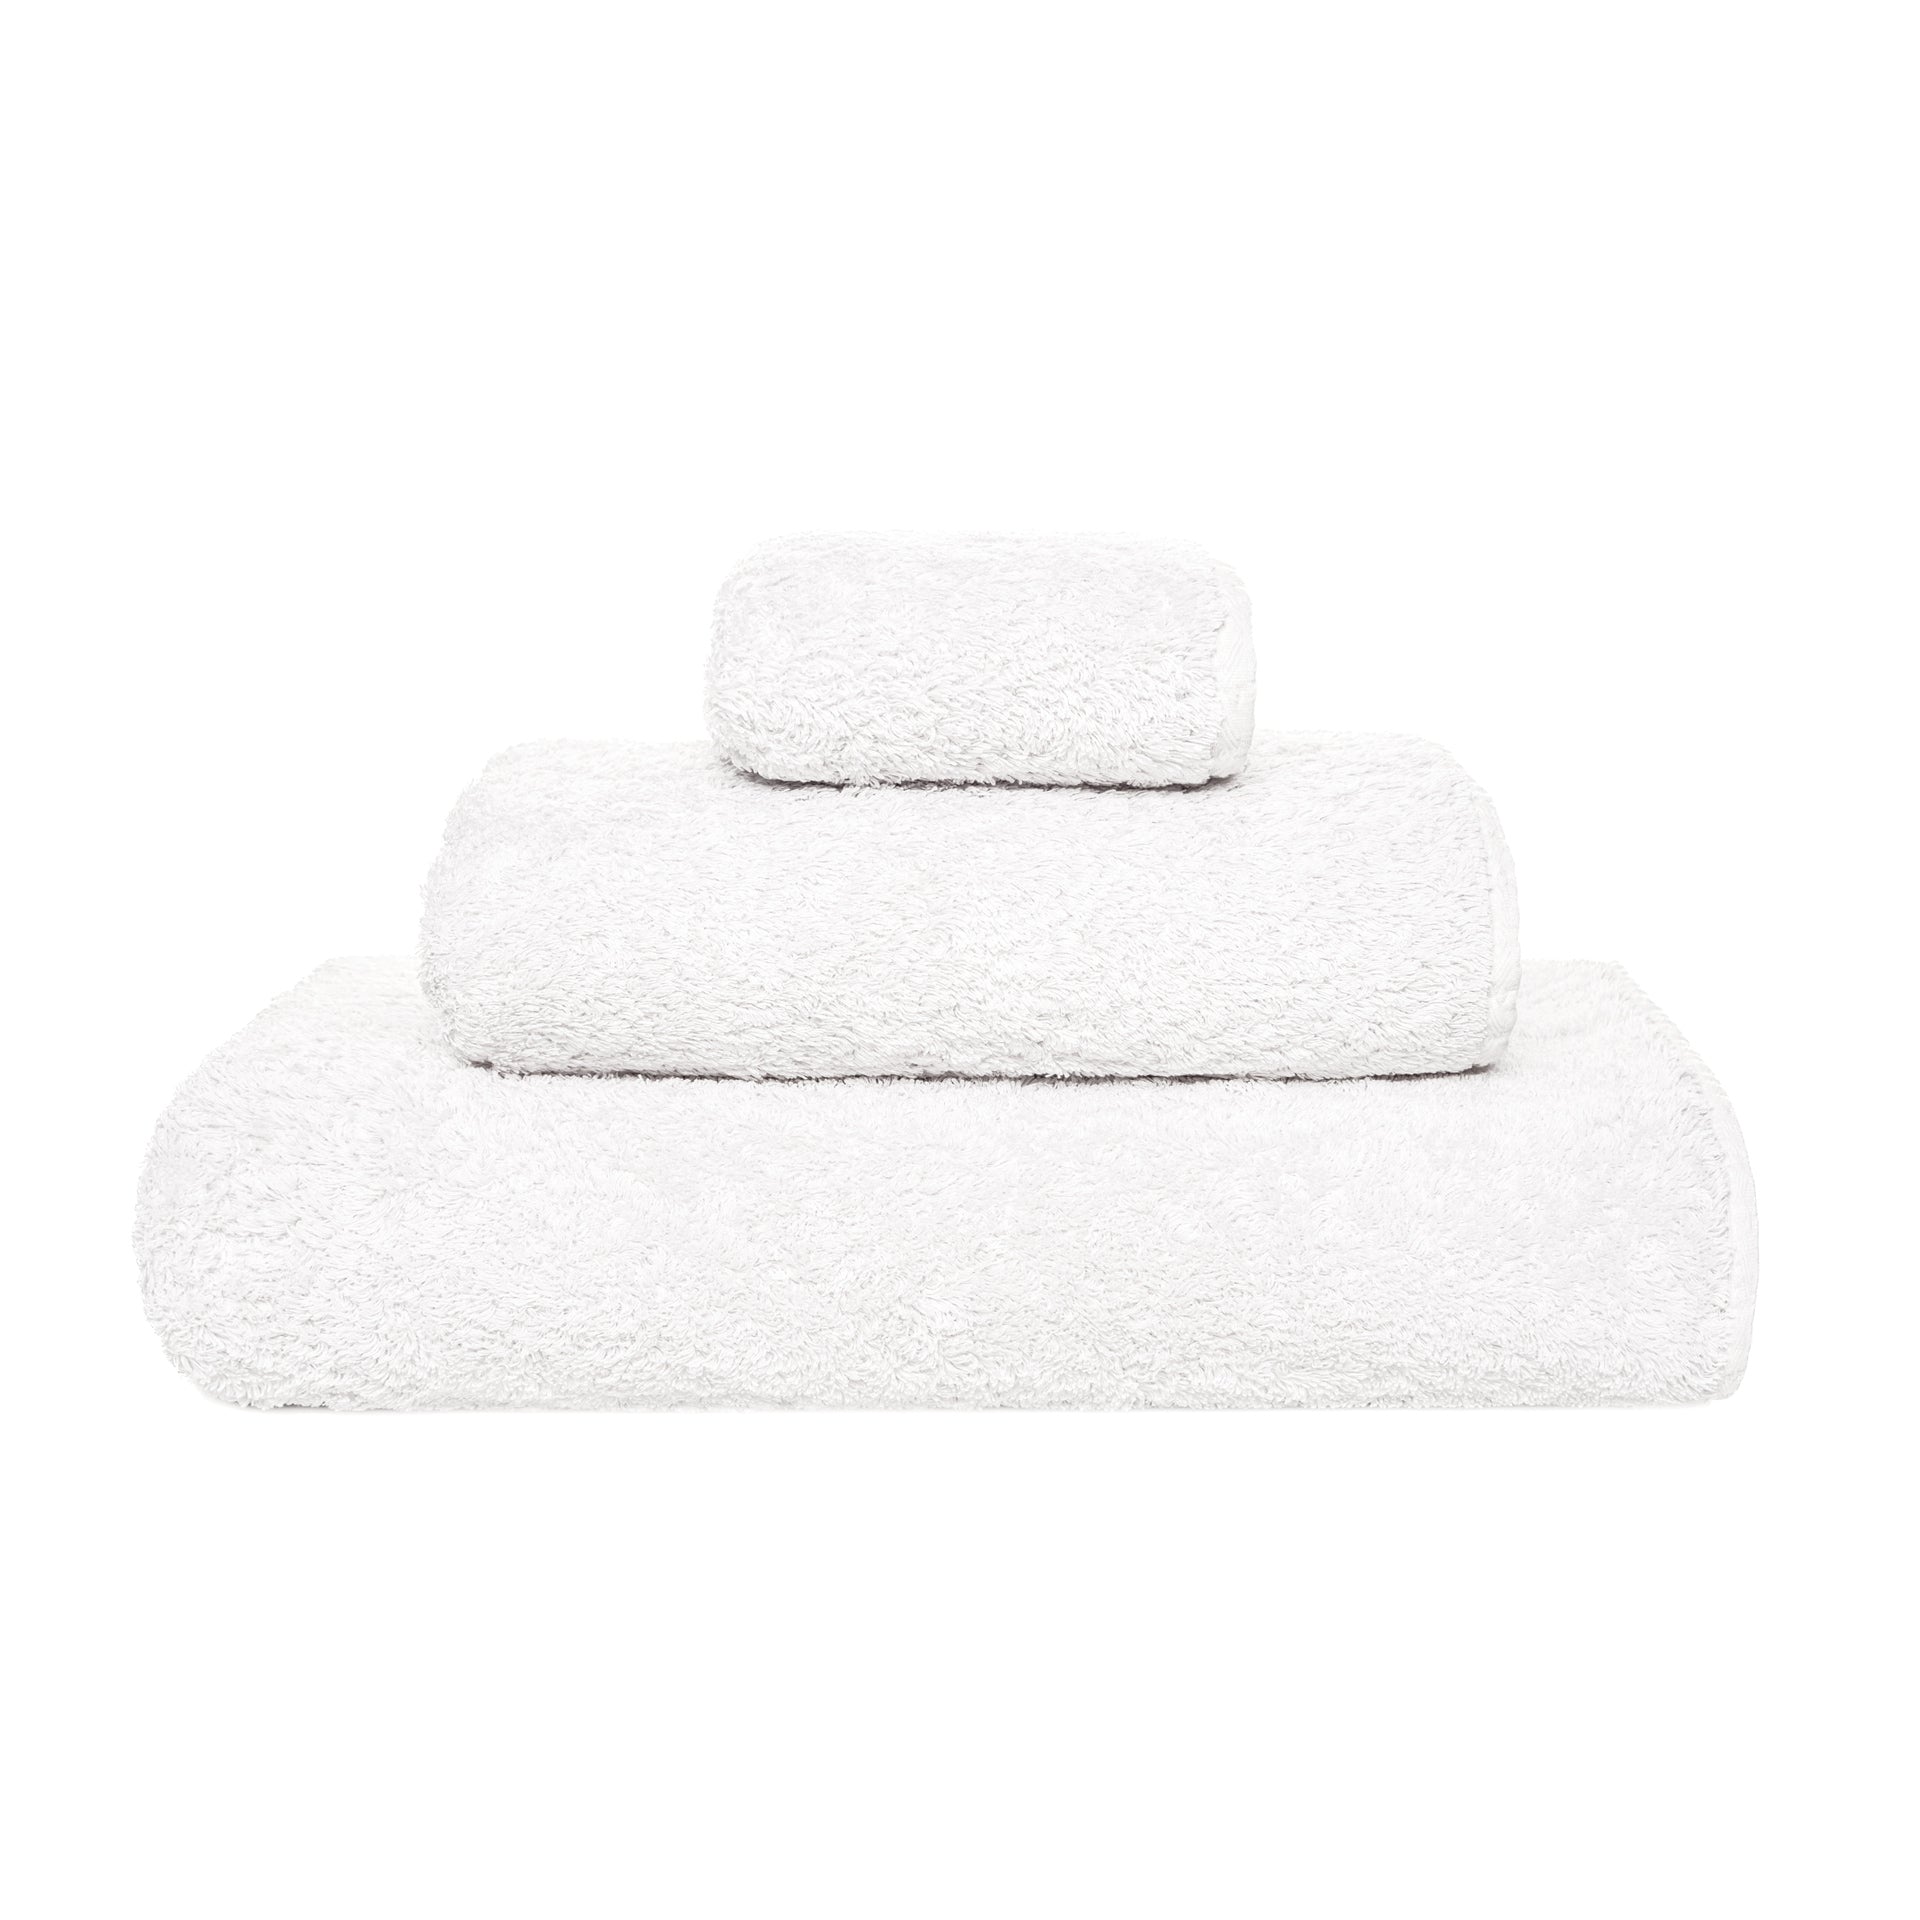 Grand Egoist Sea Island Cotton Bath towel